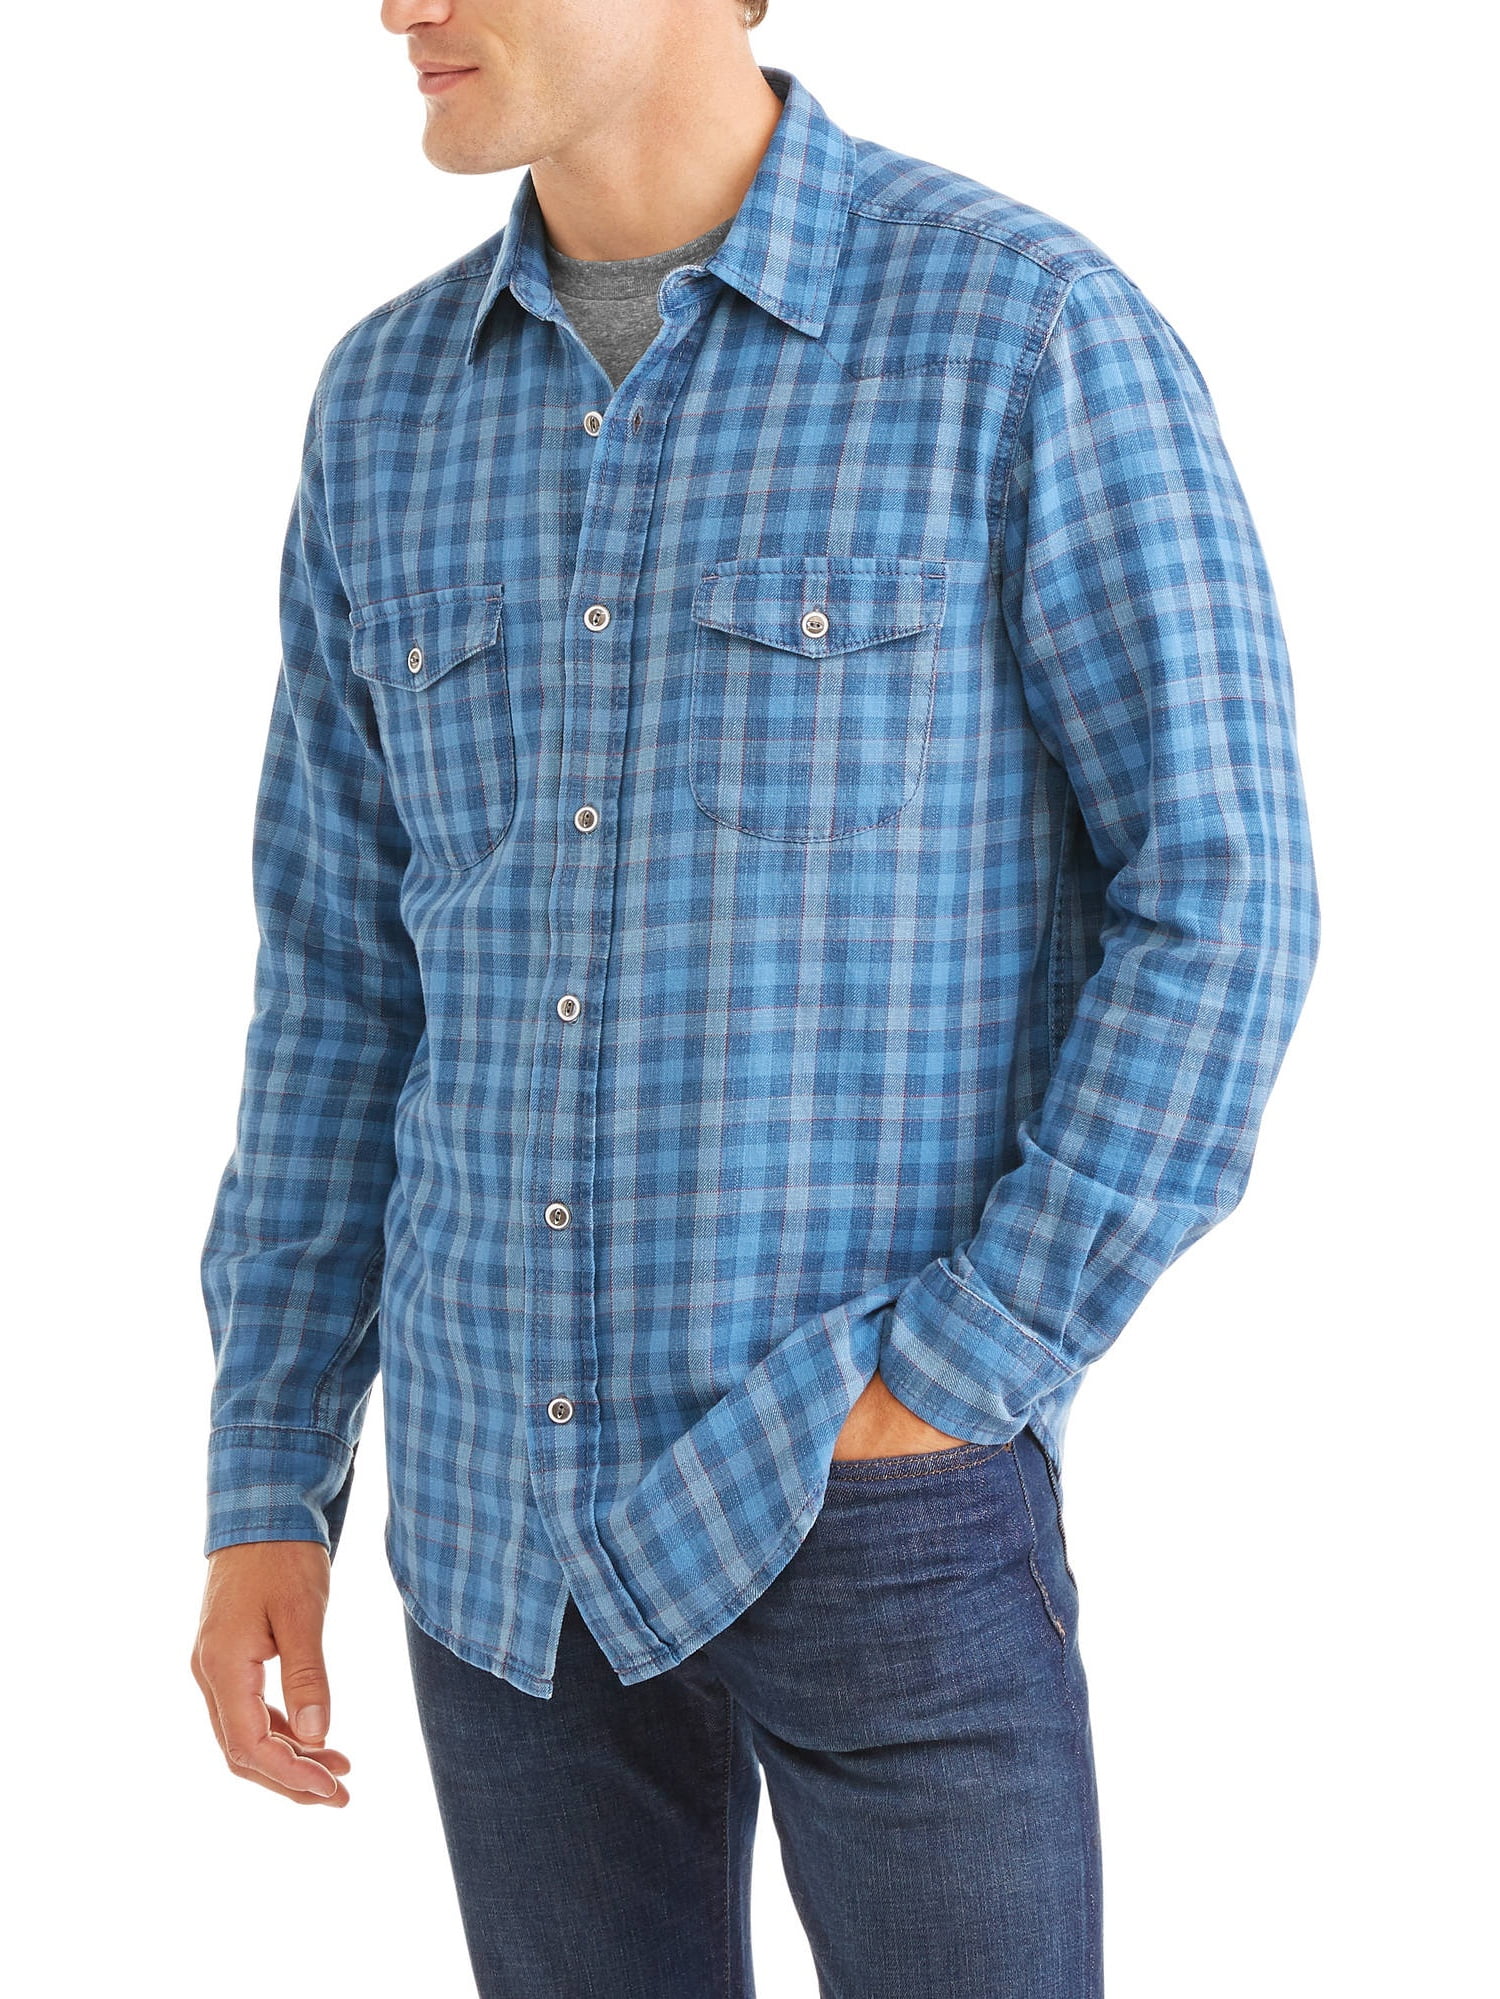 Big Men's Long Sleeve Plaid Shirt - Walmart.com